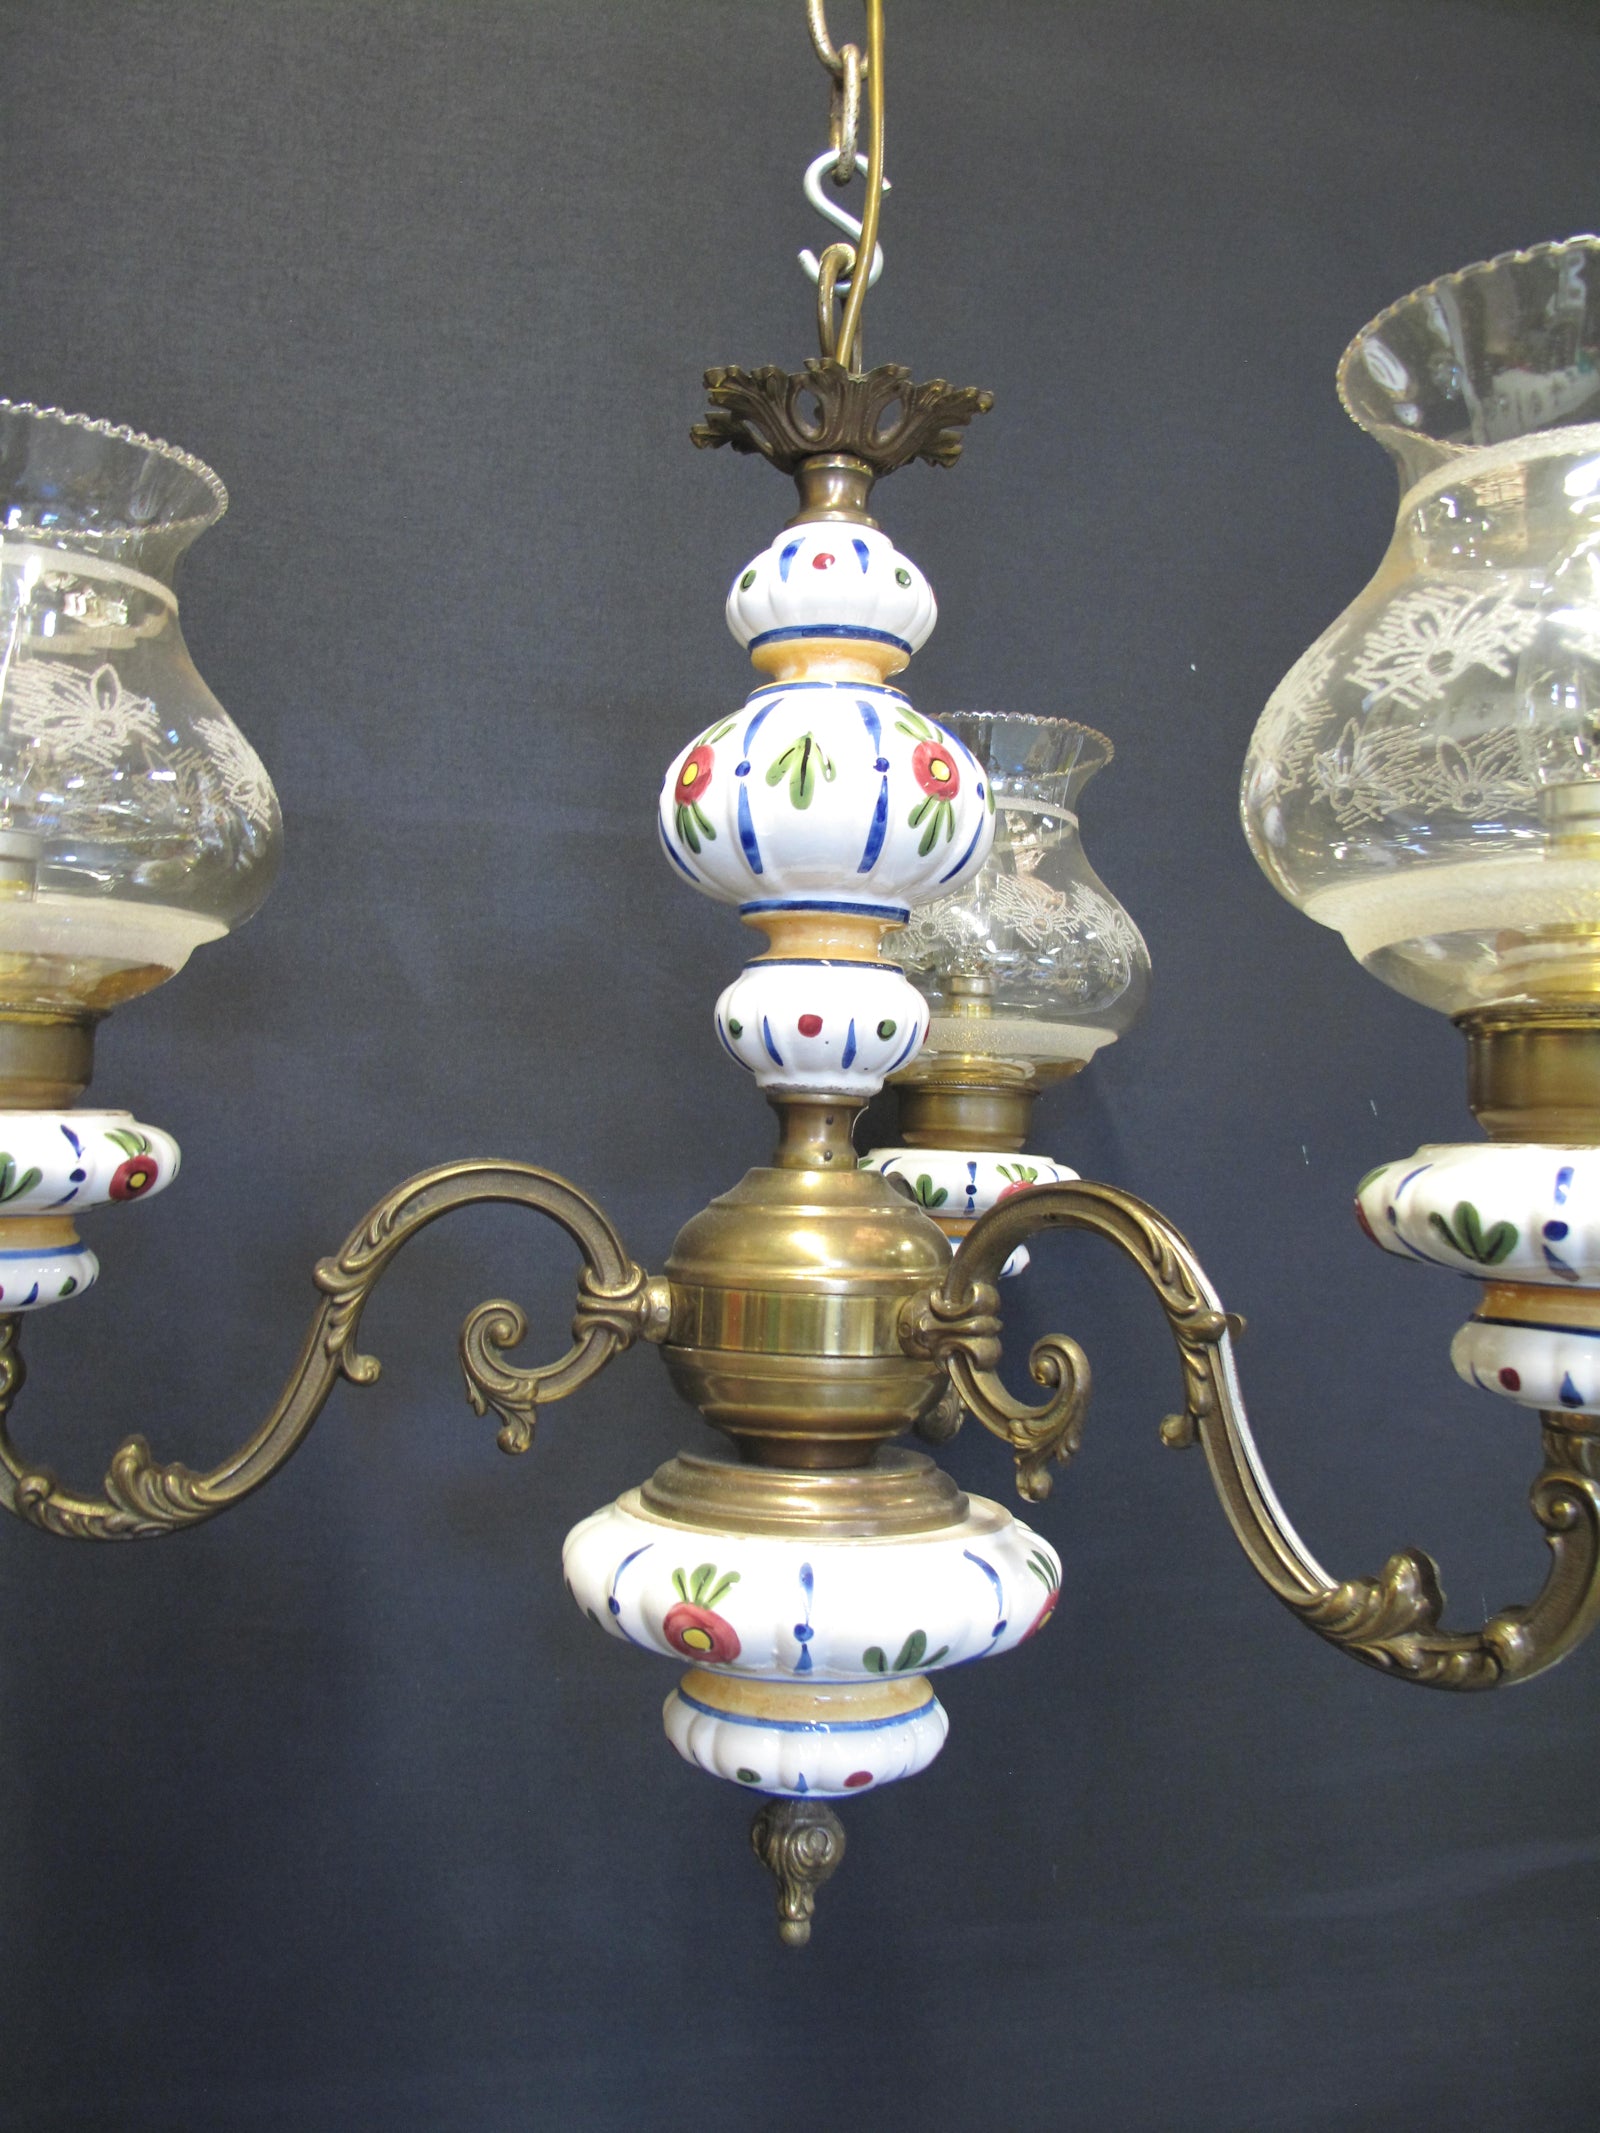 3 Arm brass & ceramic chandelier showing the stem